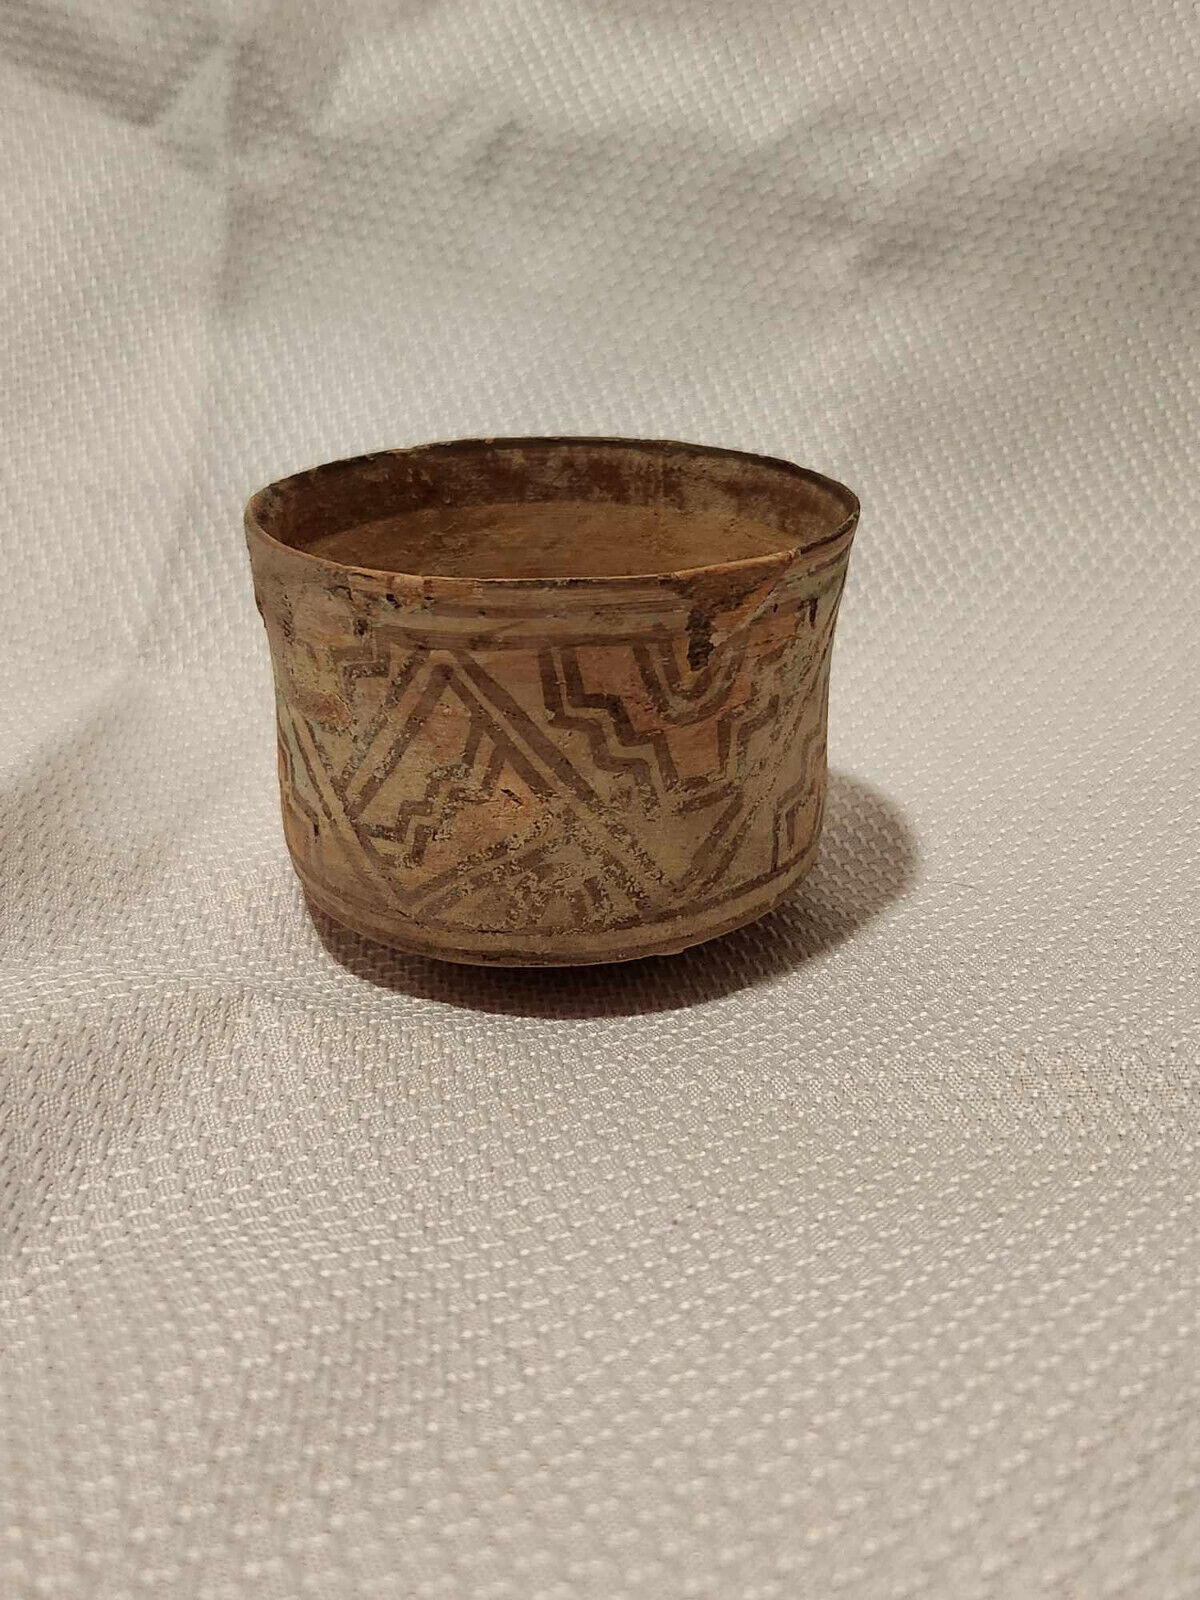  Ancient Indus Valley Civilization Terracotta Jar Pot Circa 2800 BC